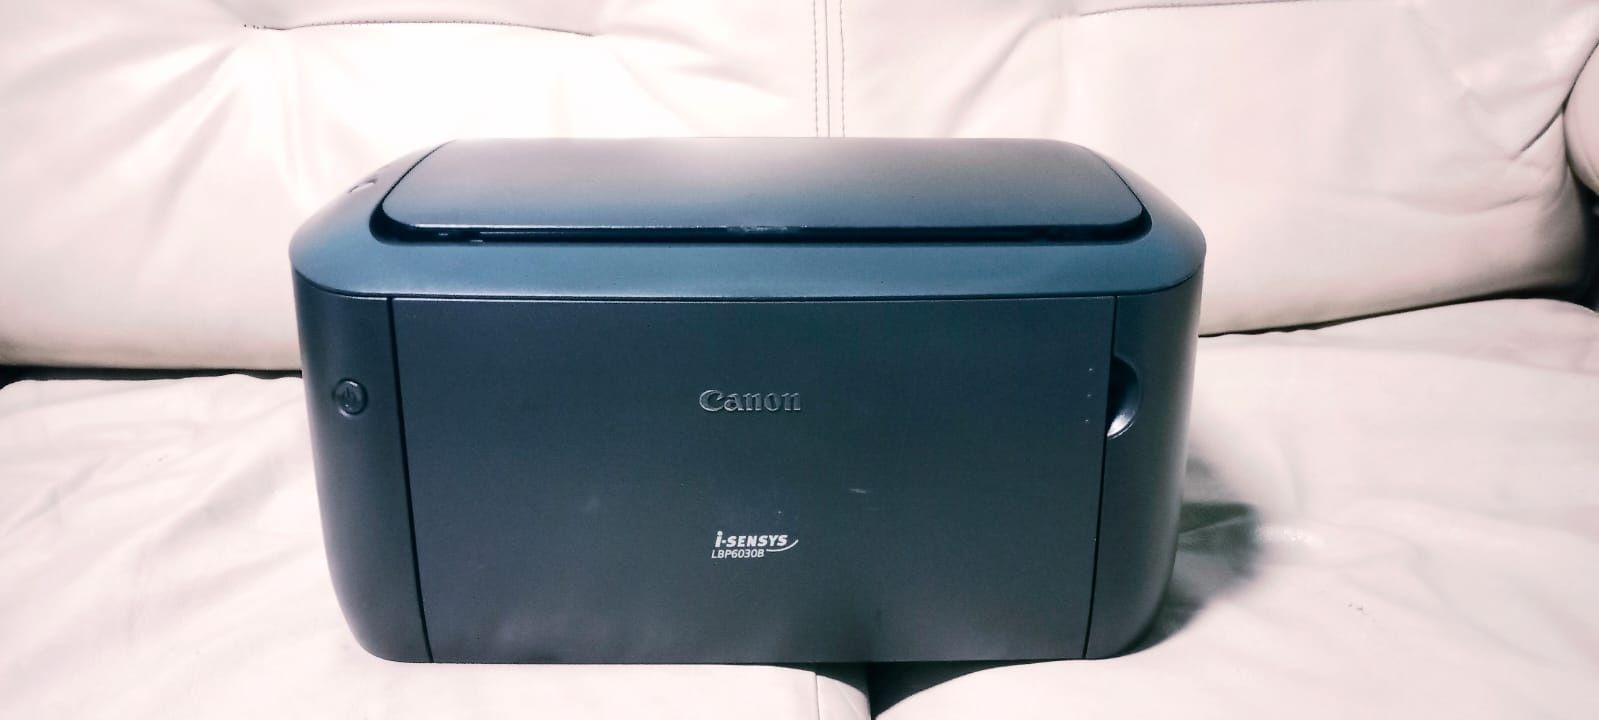 Принтер Canon i -sensys LBP 6030